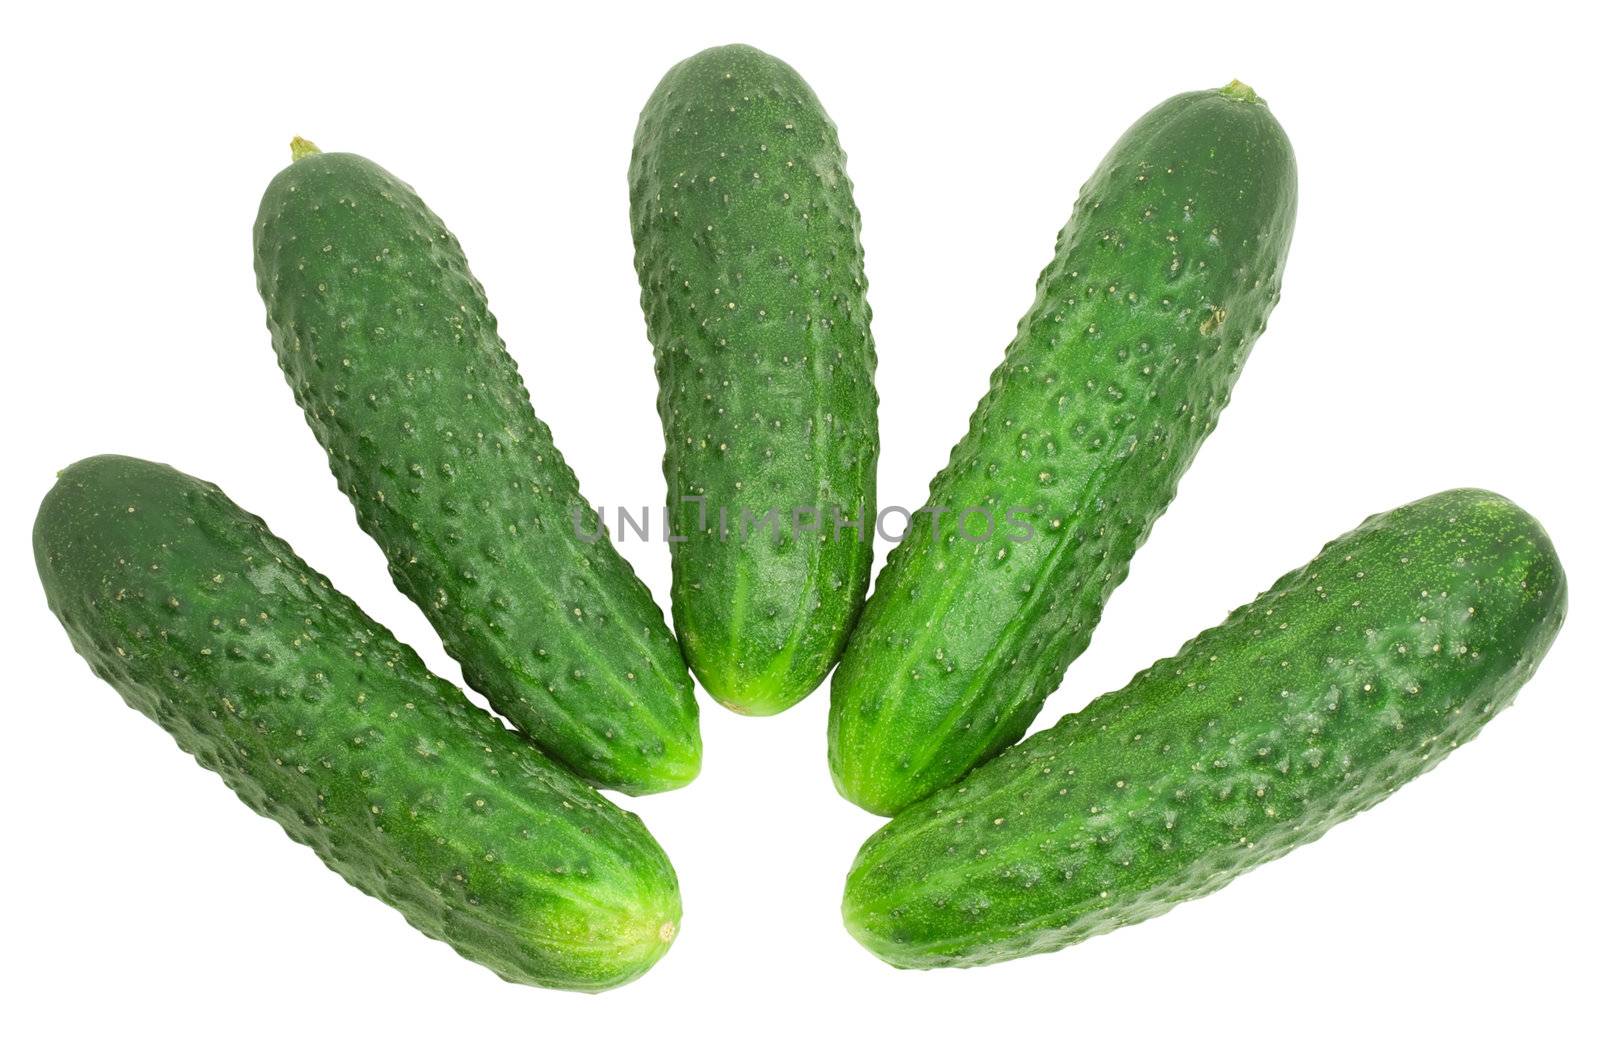 cucumbers by Zloneg